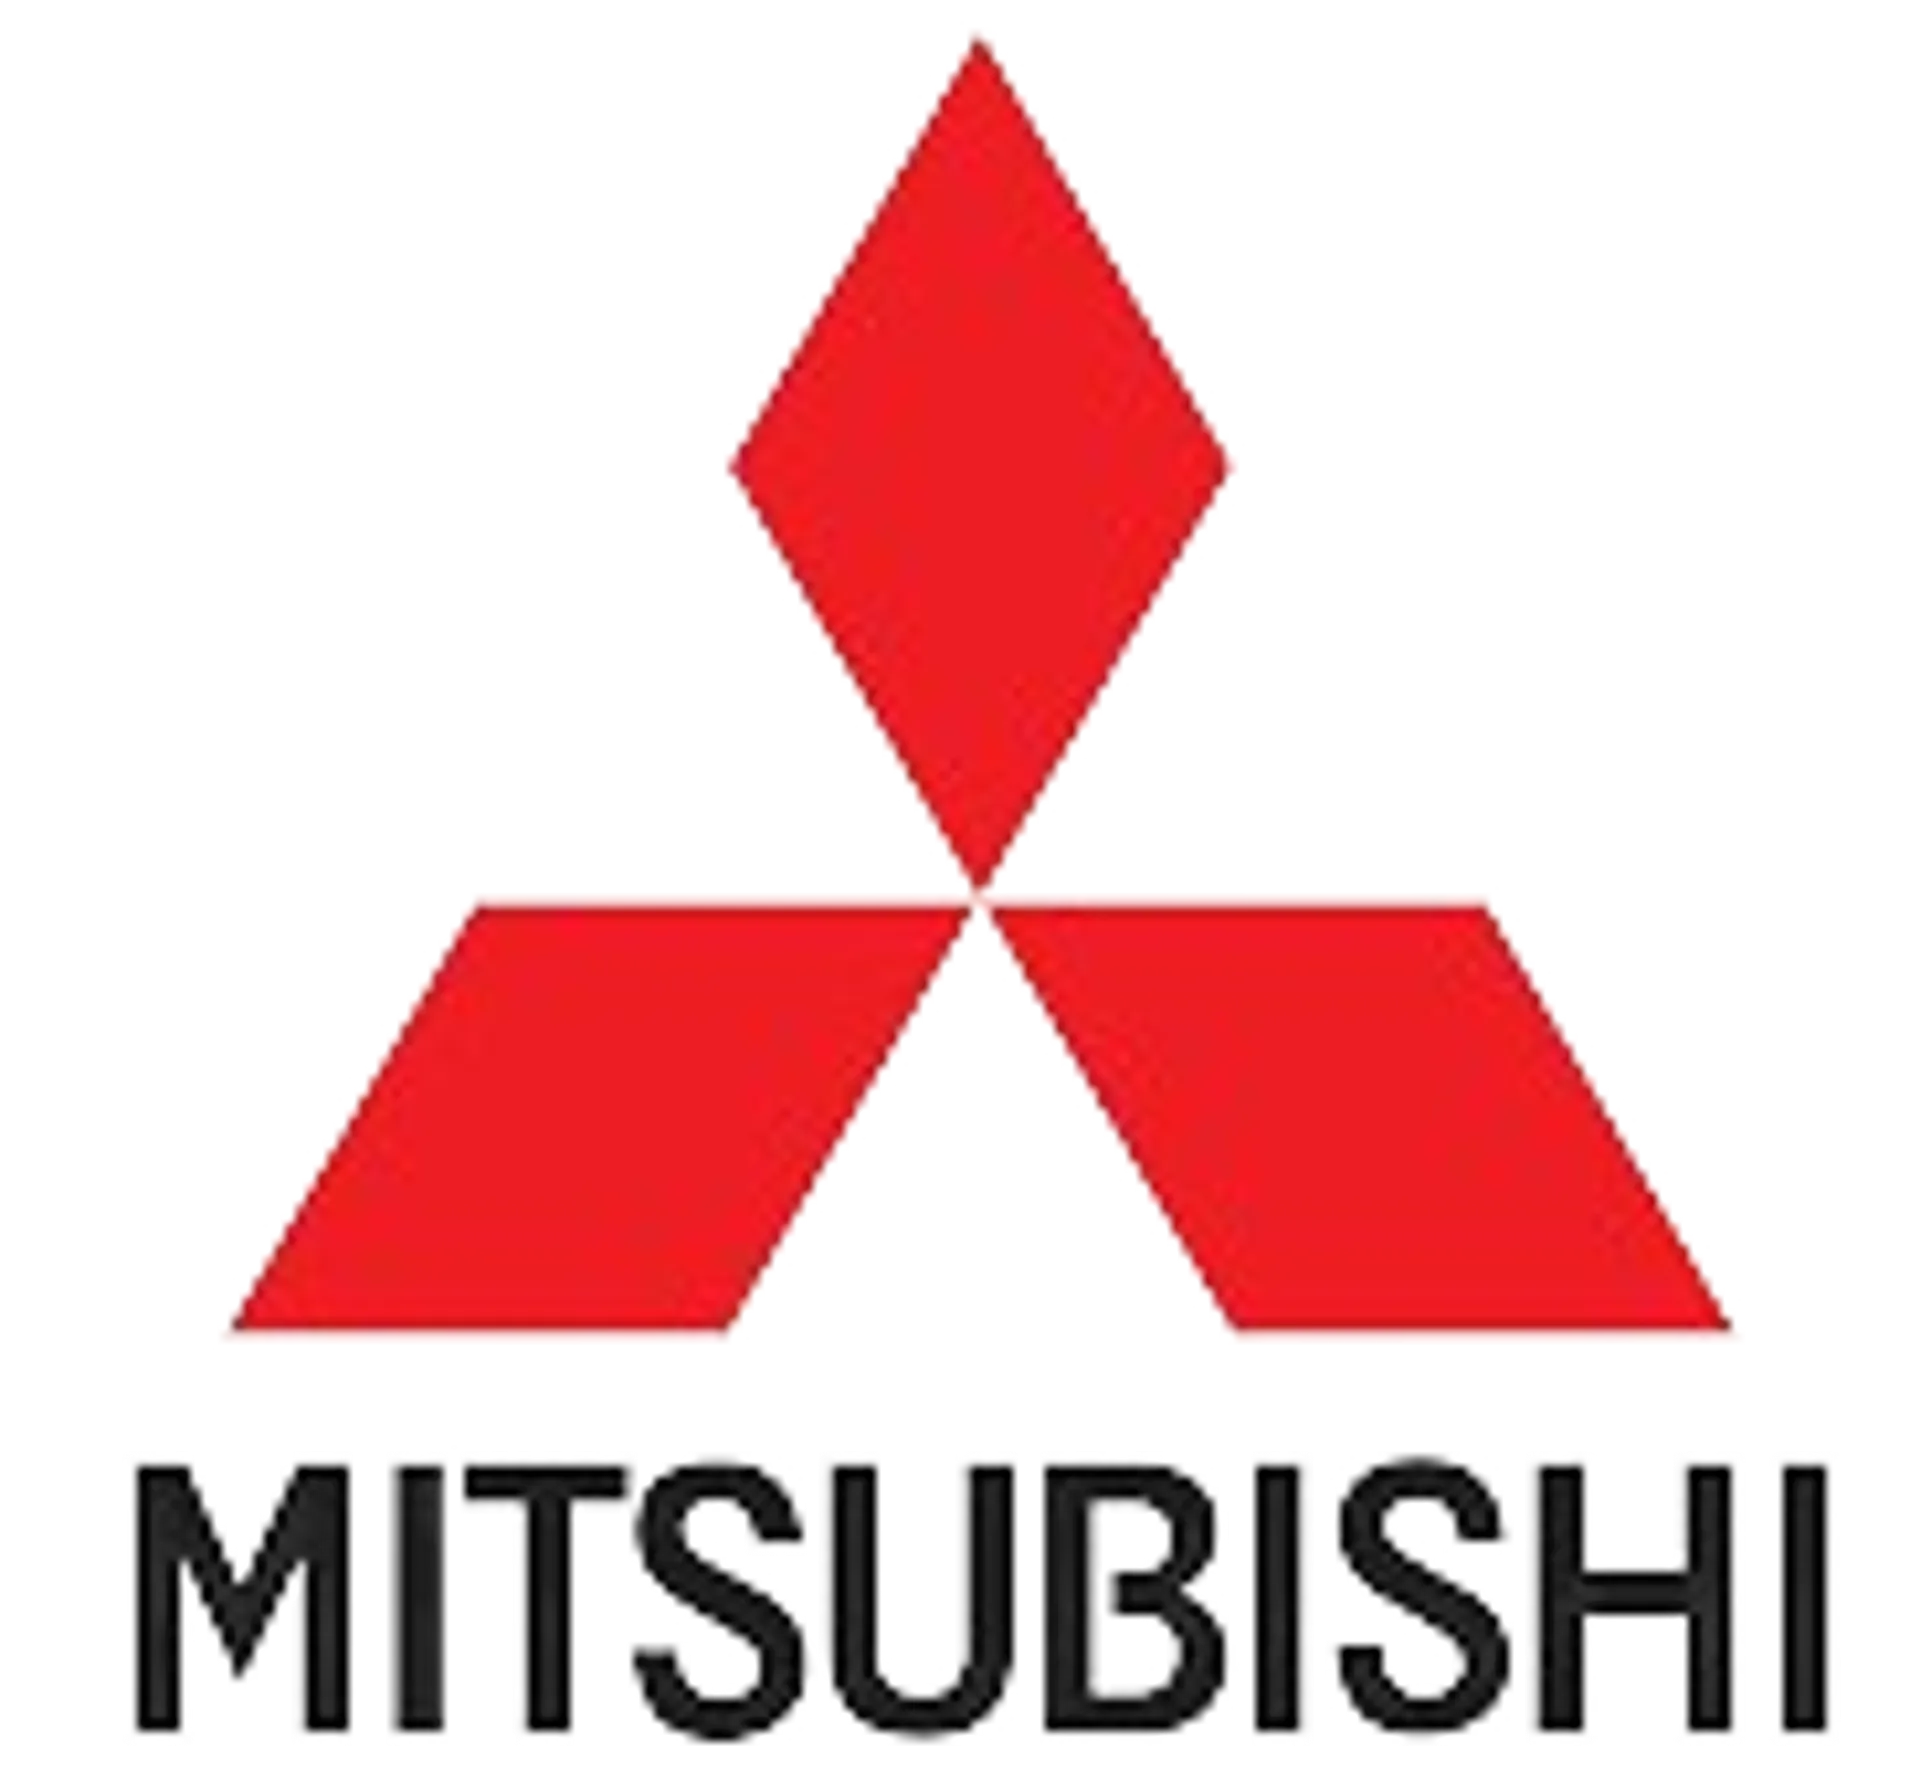 MITSUBISHI logo of current catalogue